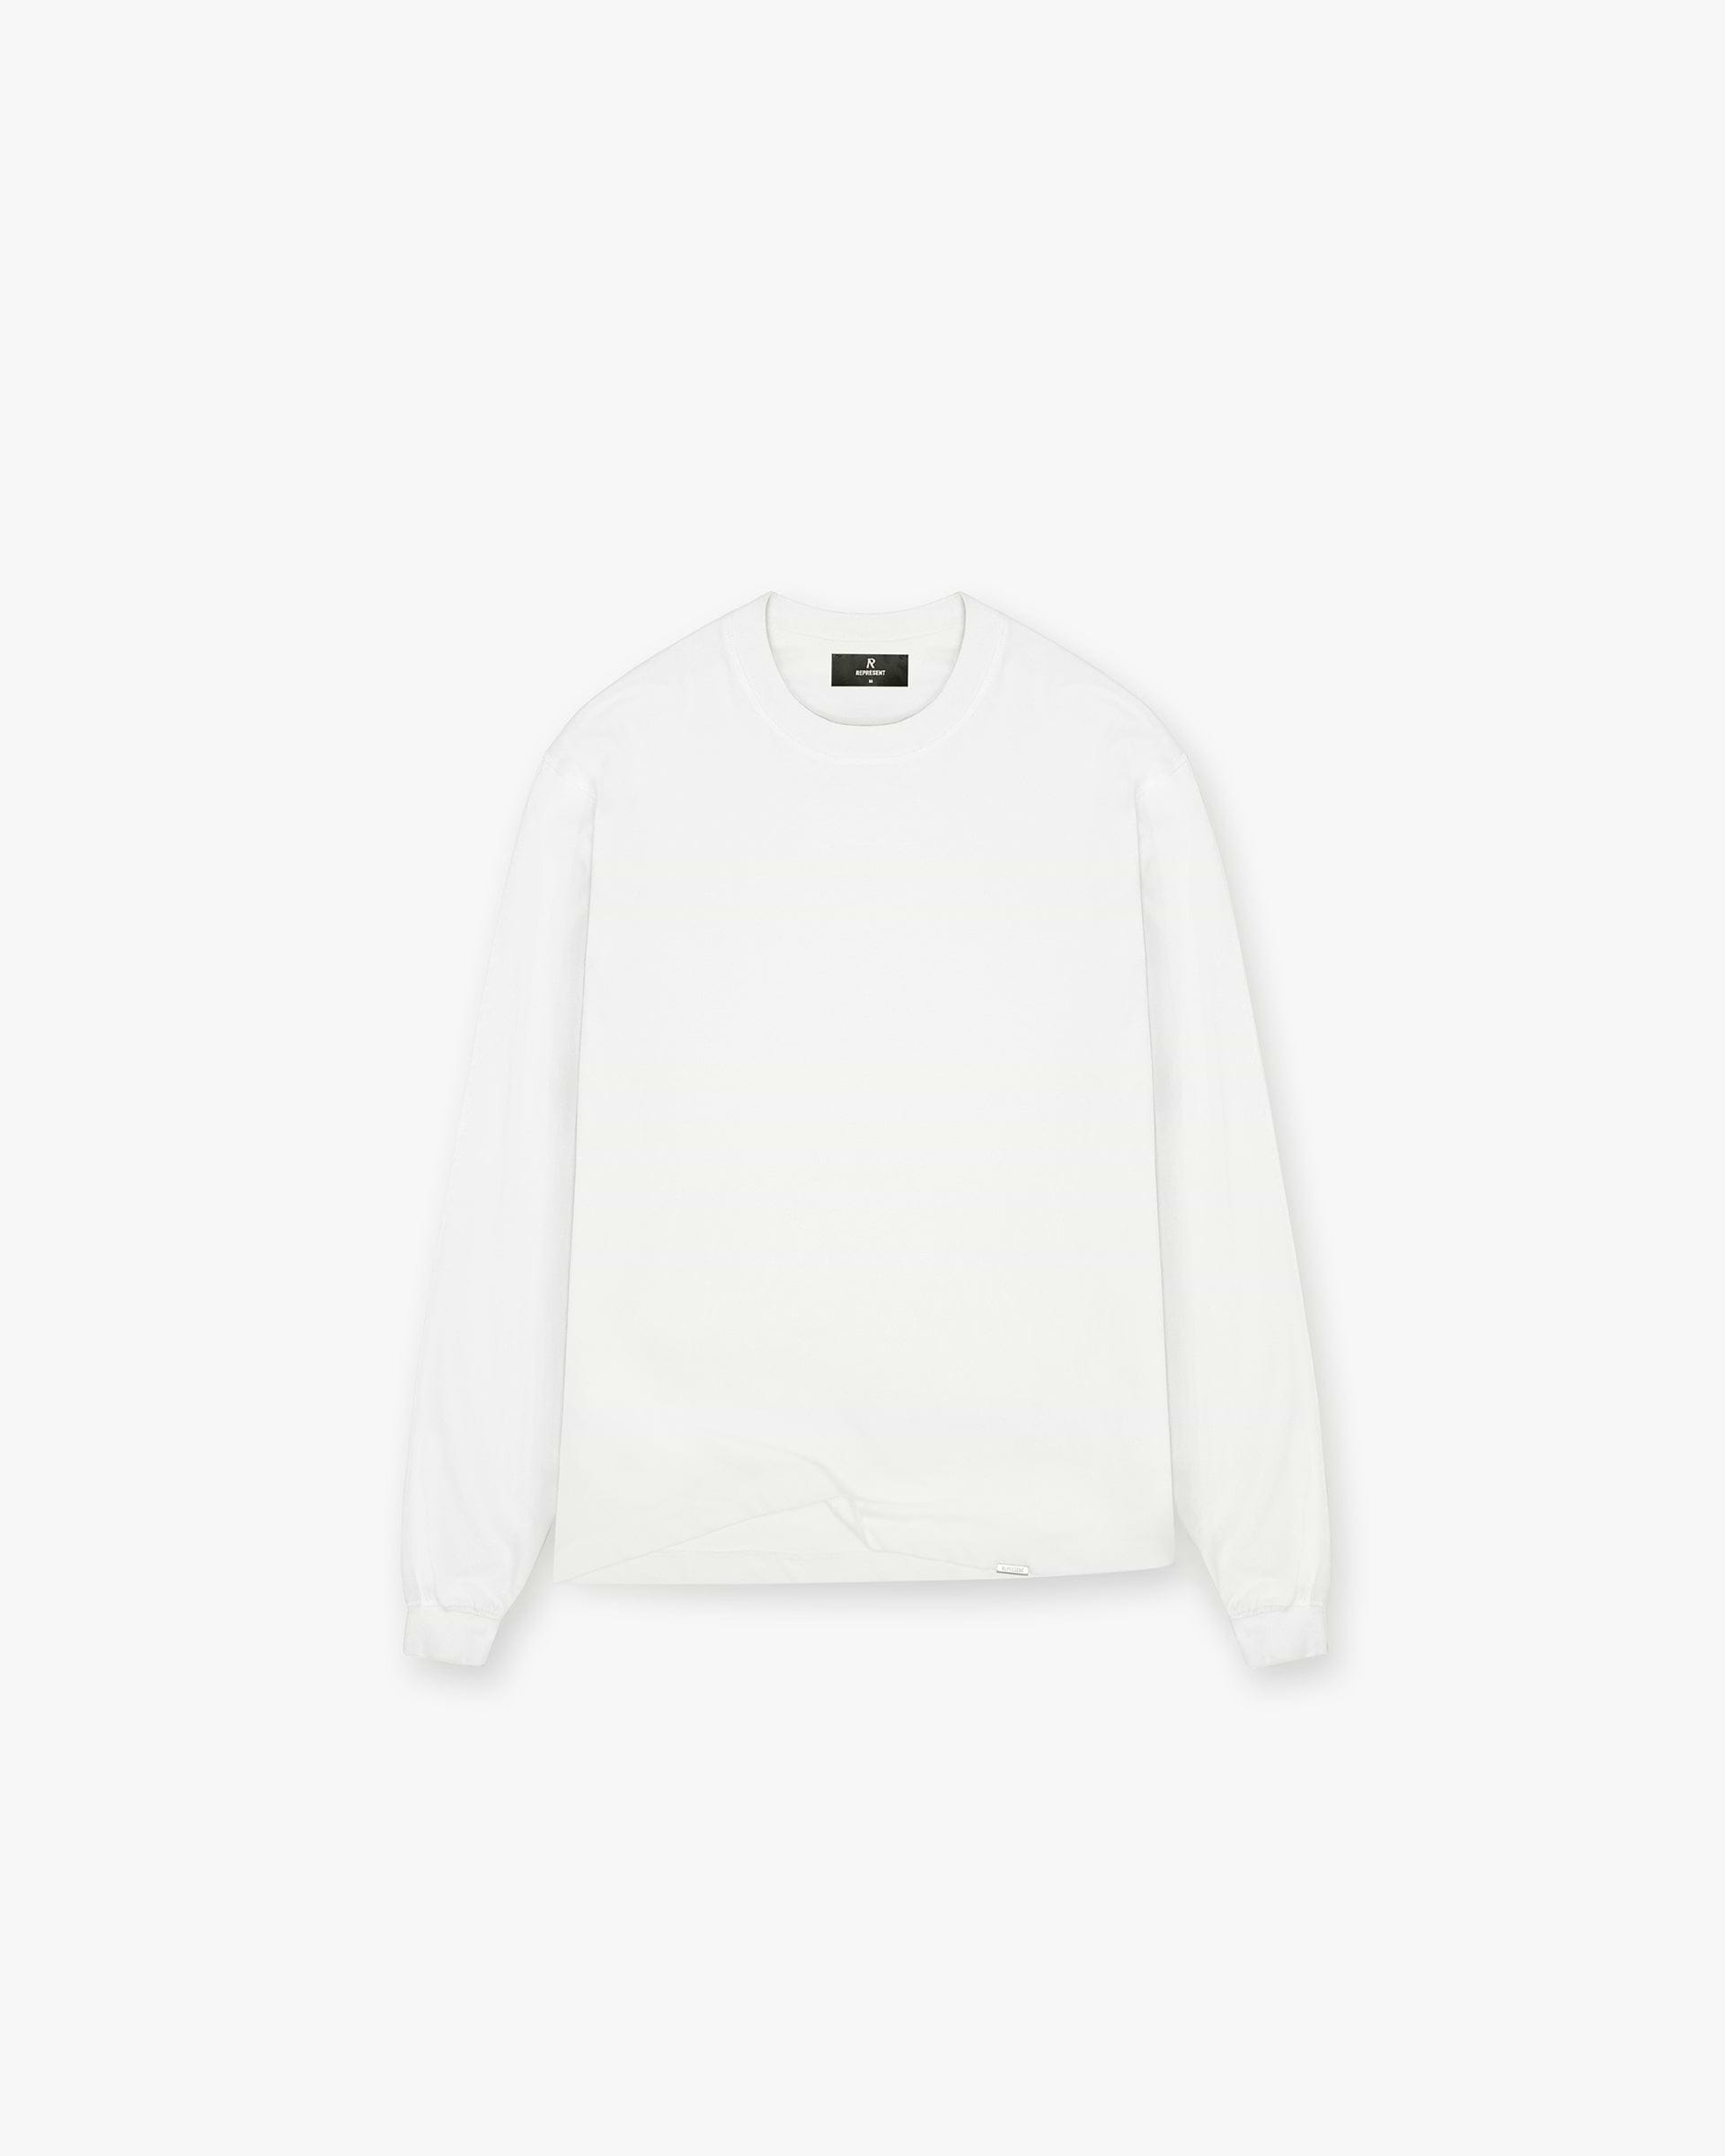 Initial T-Shirt - Flat White | REPRESENT CLO